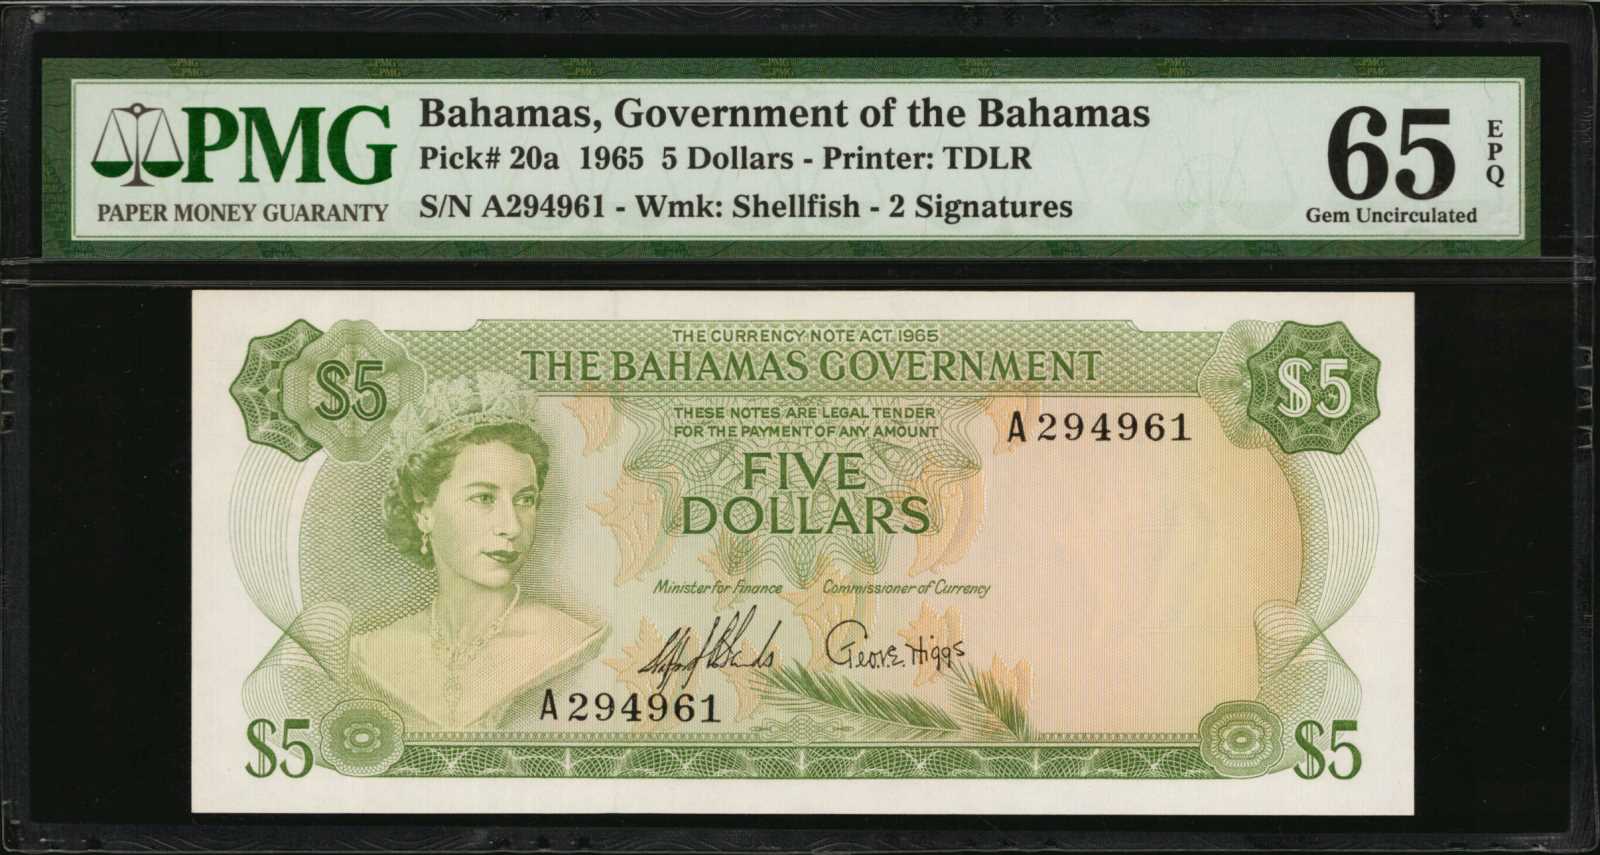 BAHAMAS. Government of the Bahamas. 5 Dollars